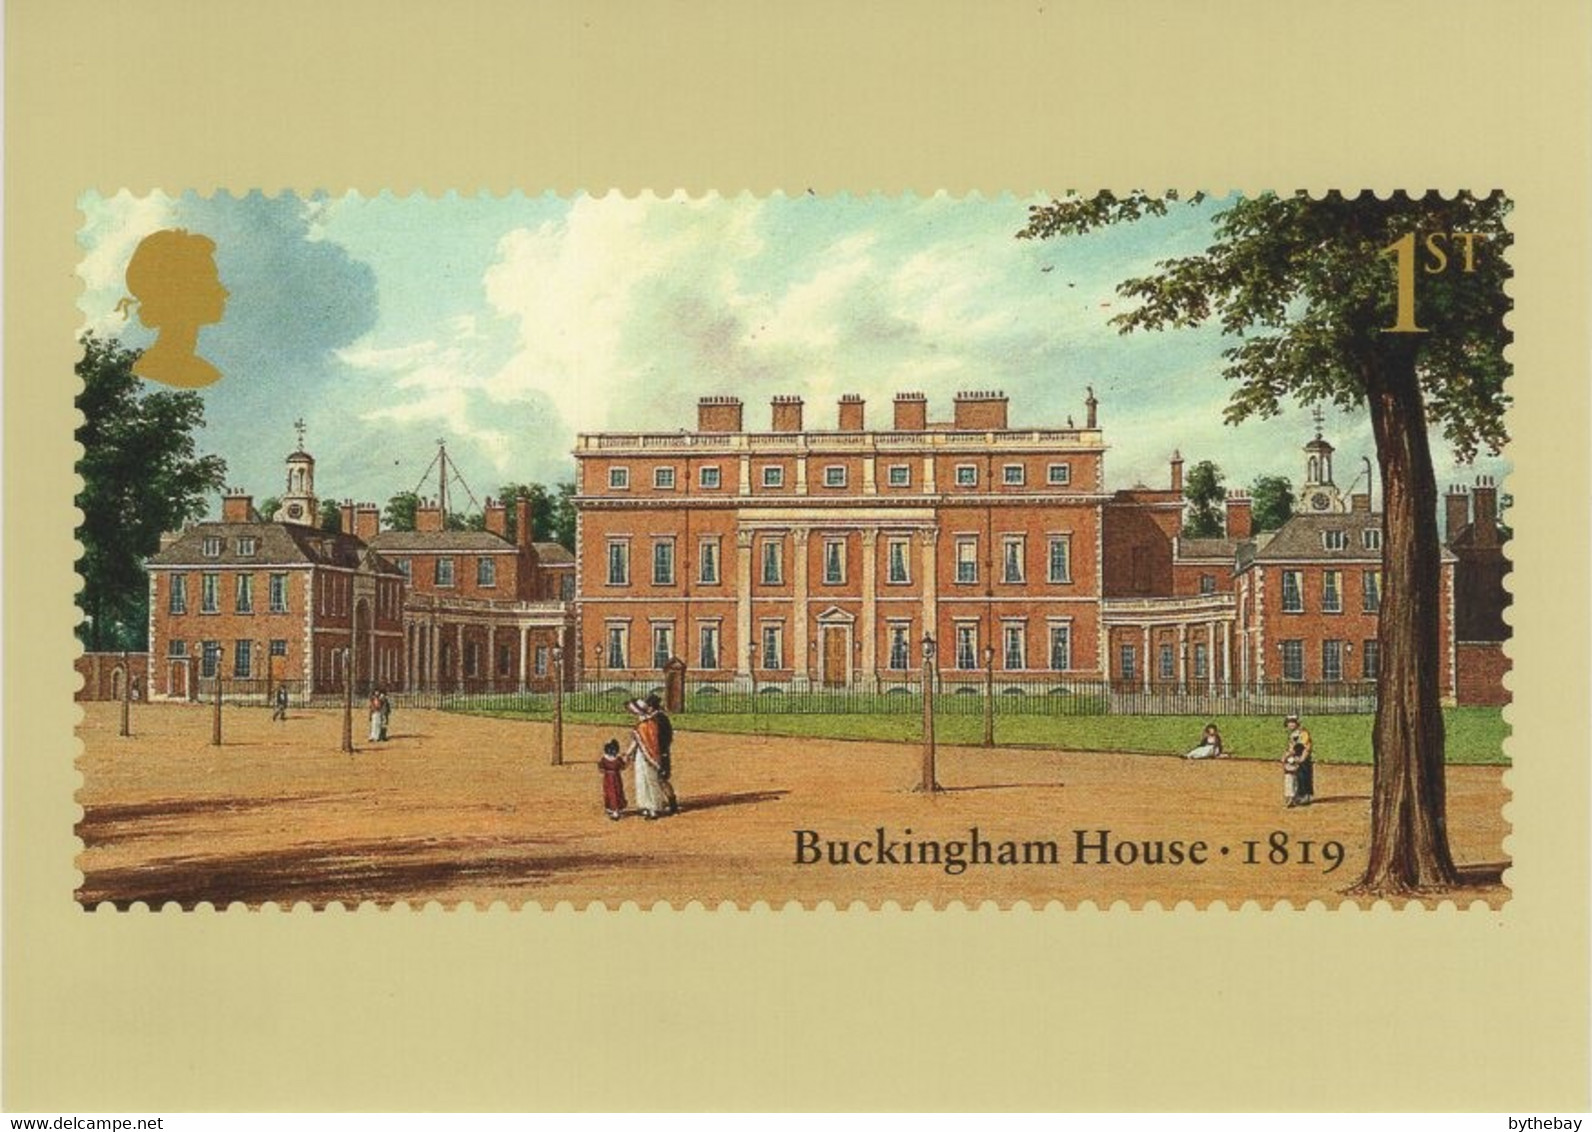 Great Britain 2014 PHQ Card Sc 3282 1st Buckingham House 1819 - PHQ Cards